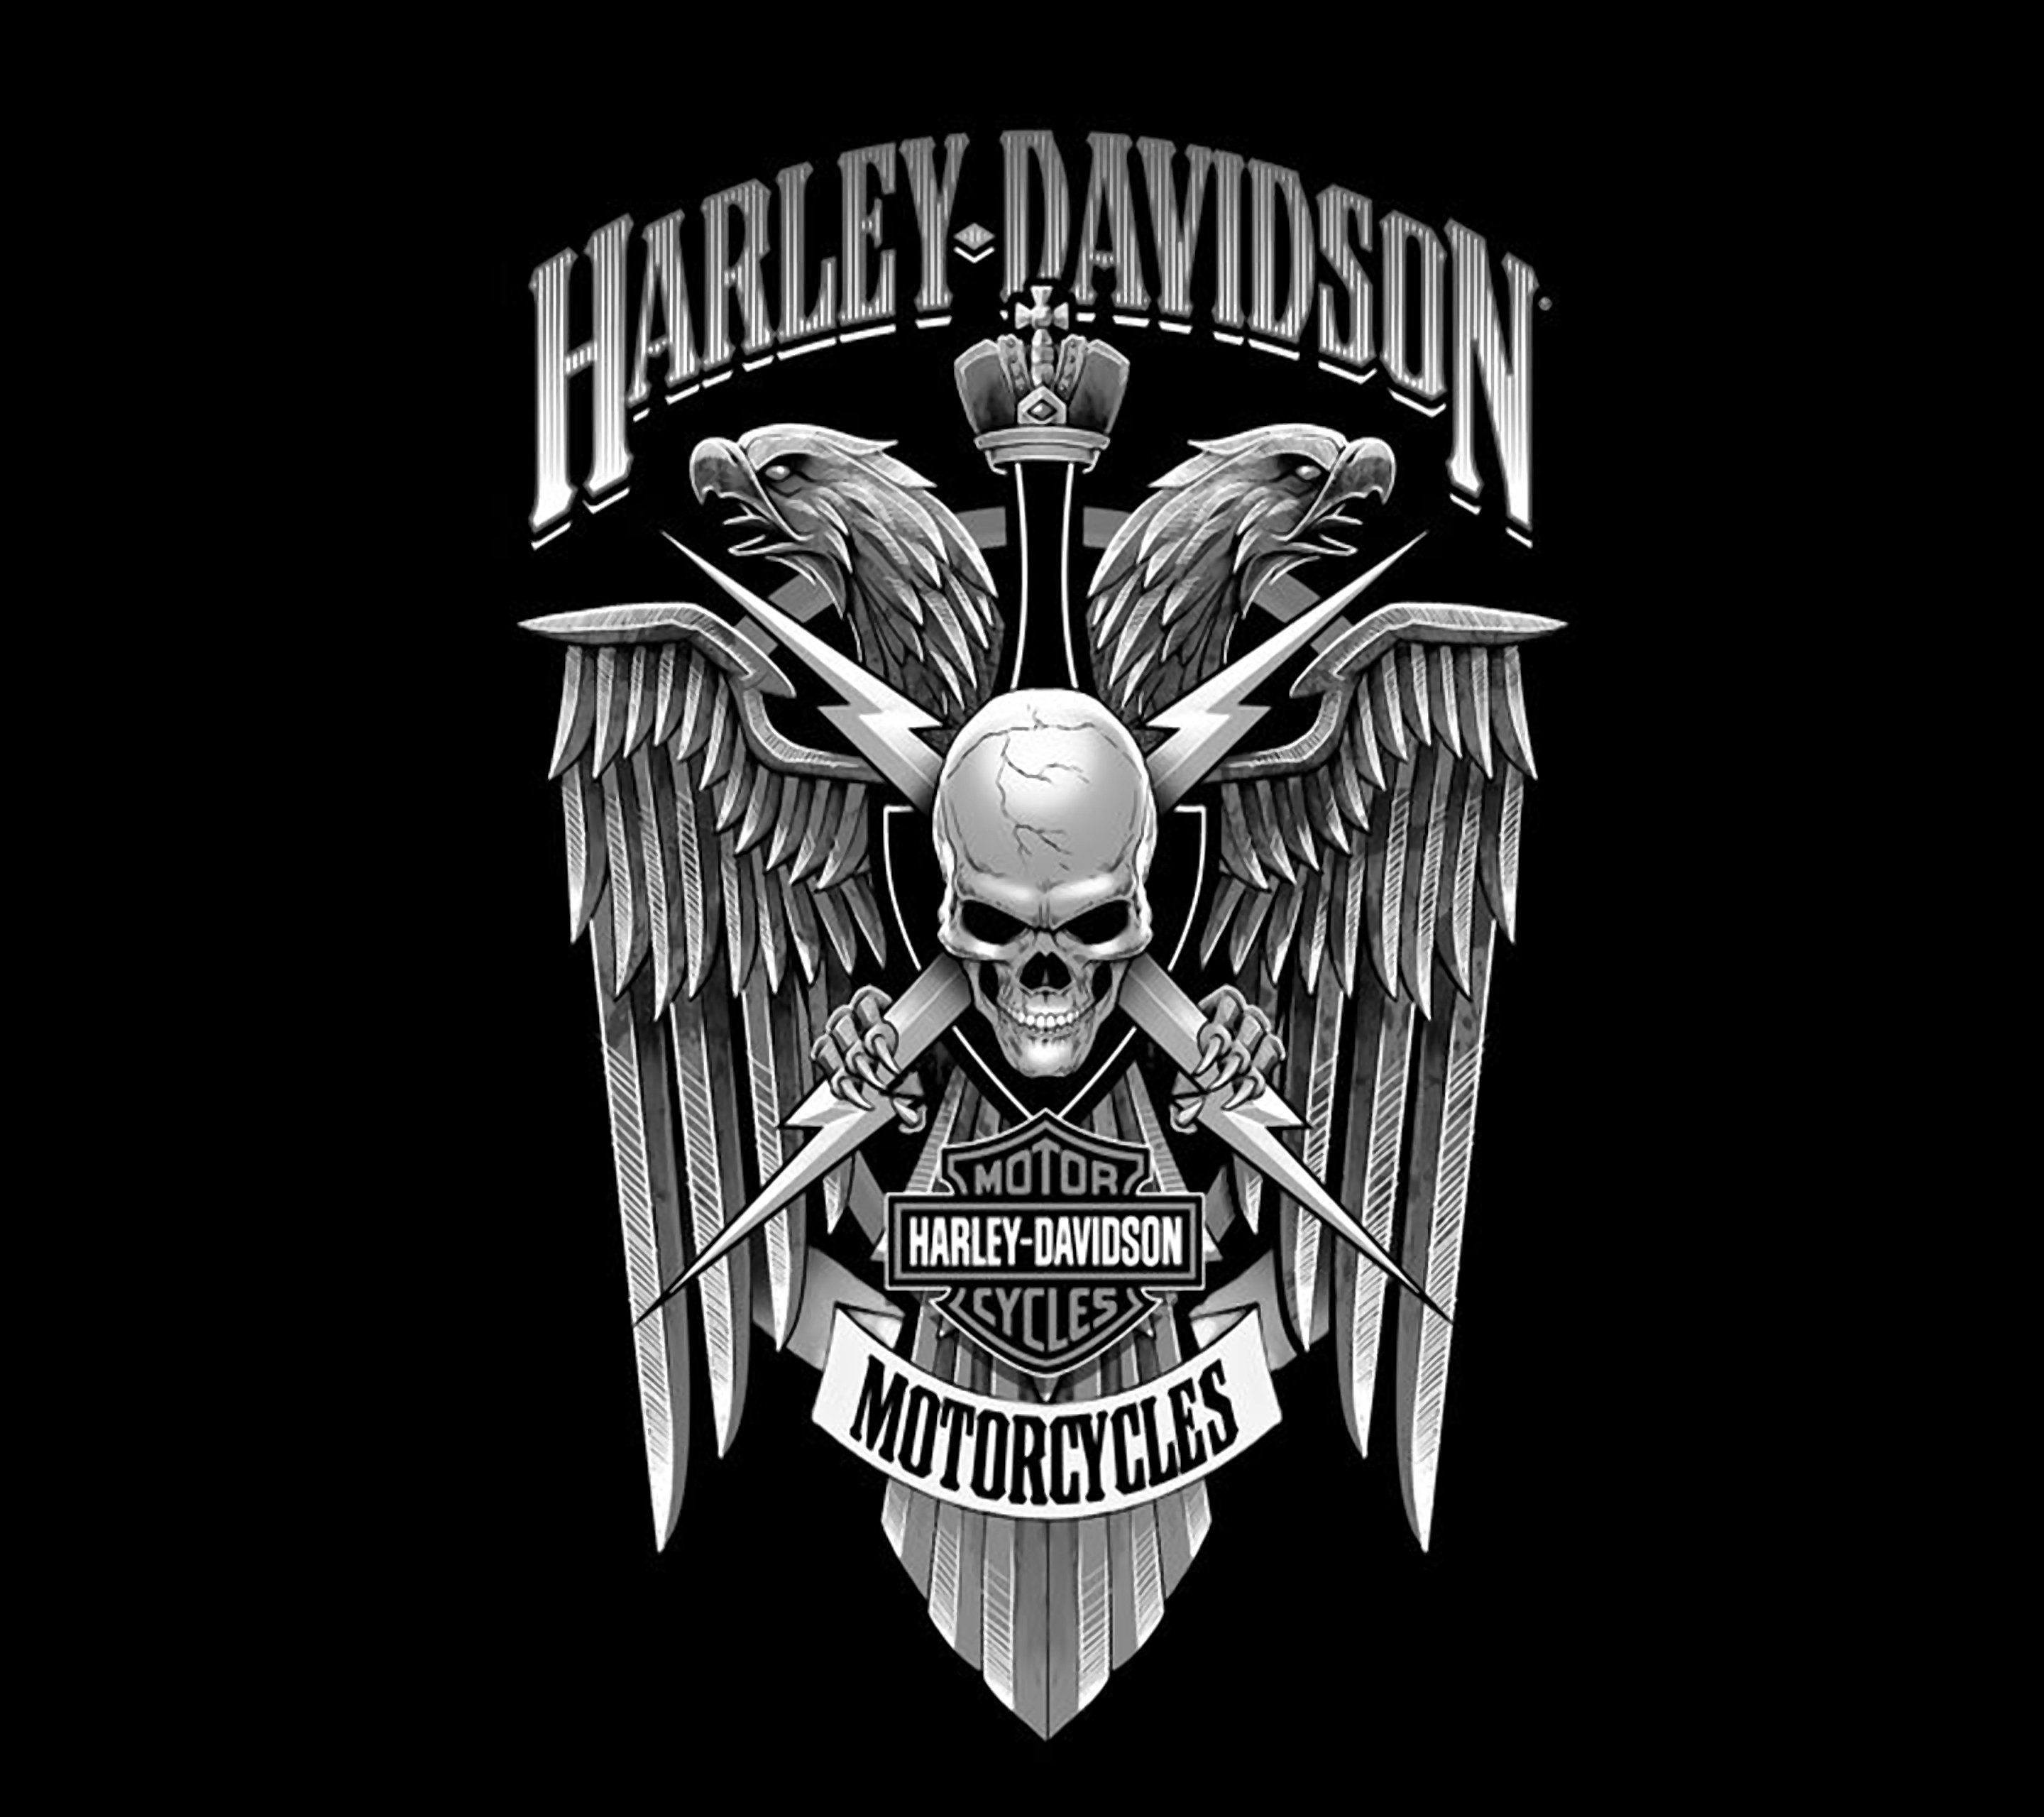 Harley Davidson-wallpaper-10532061 wallpaper | 2880x2560 | 624864 ...